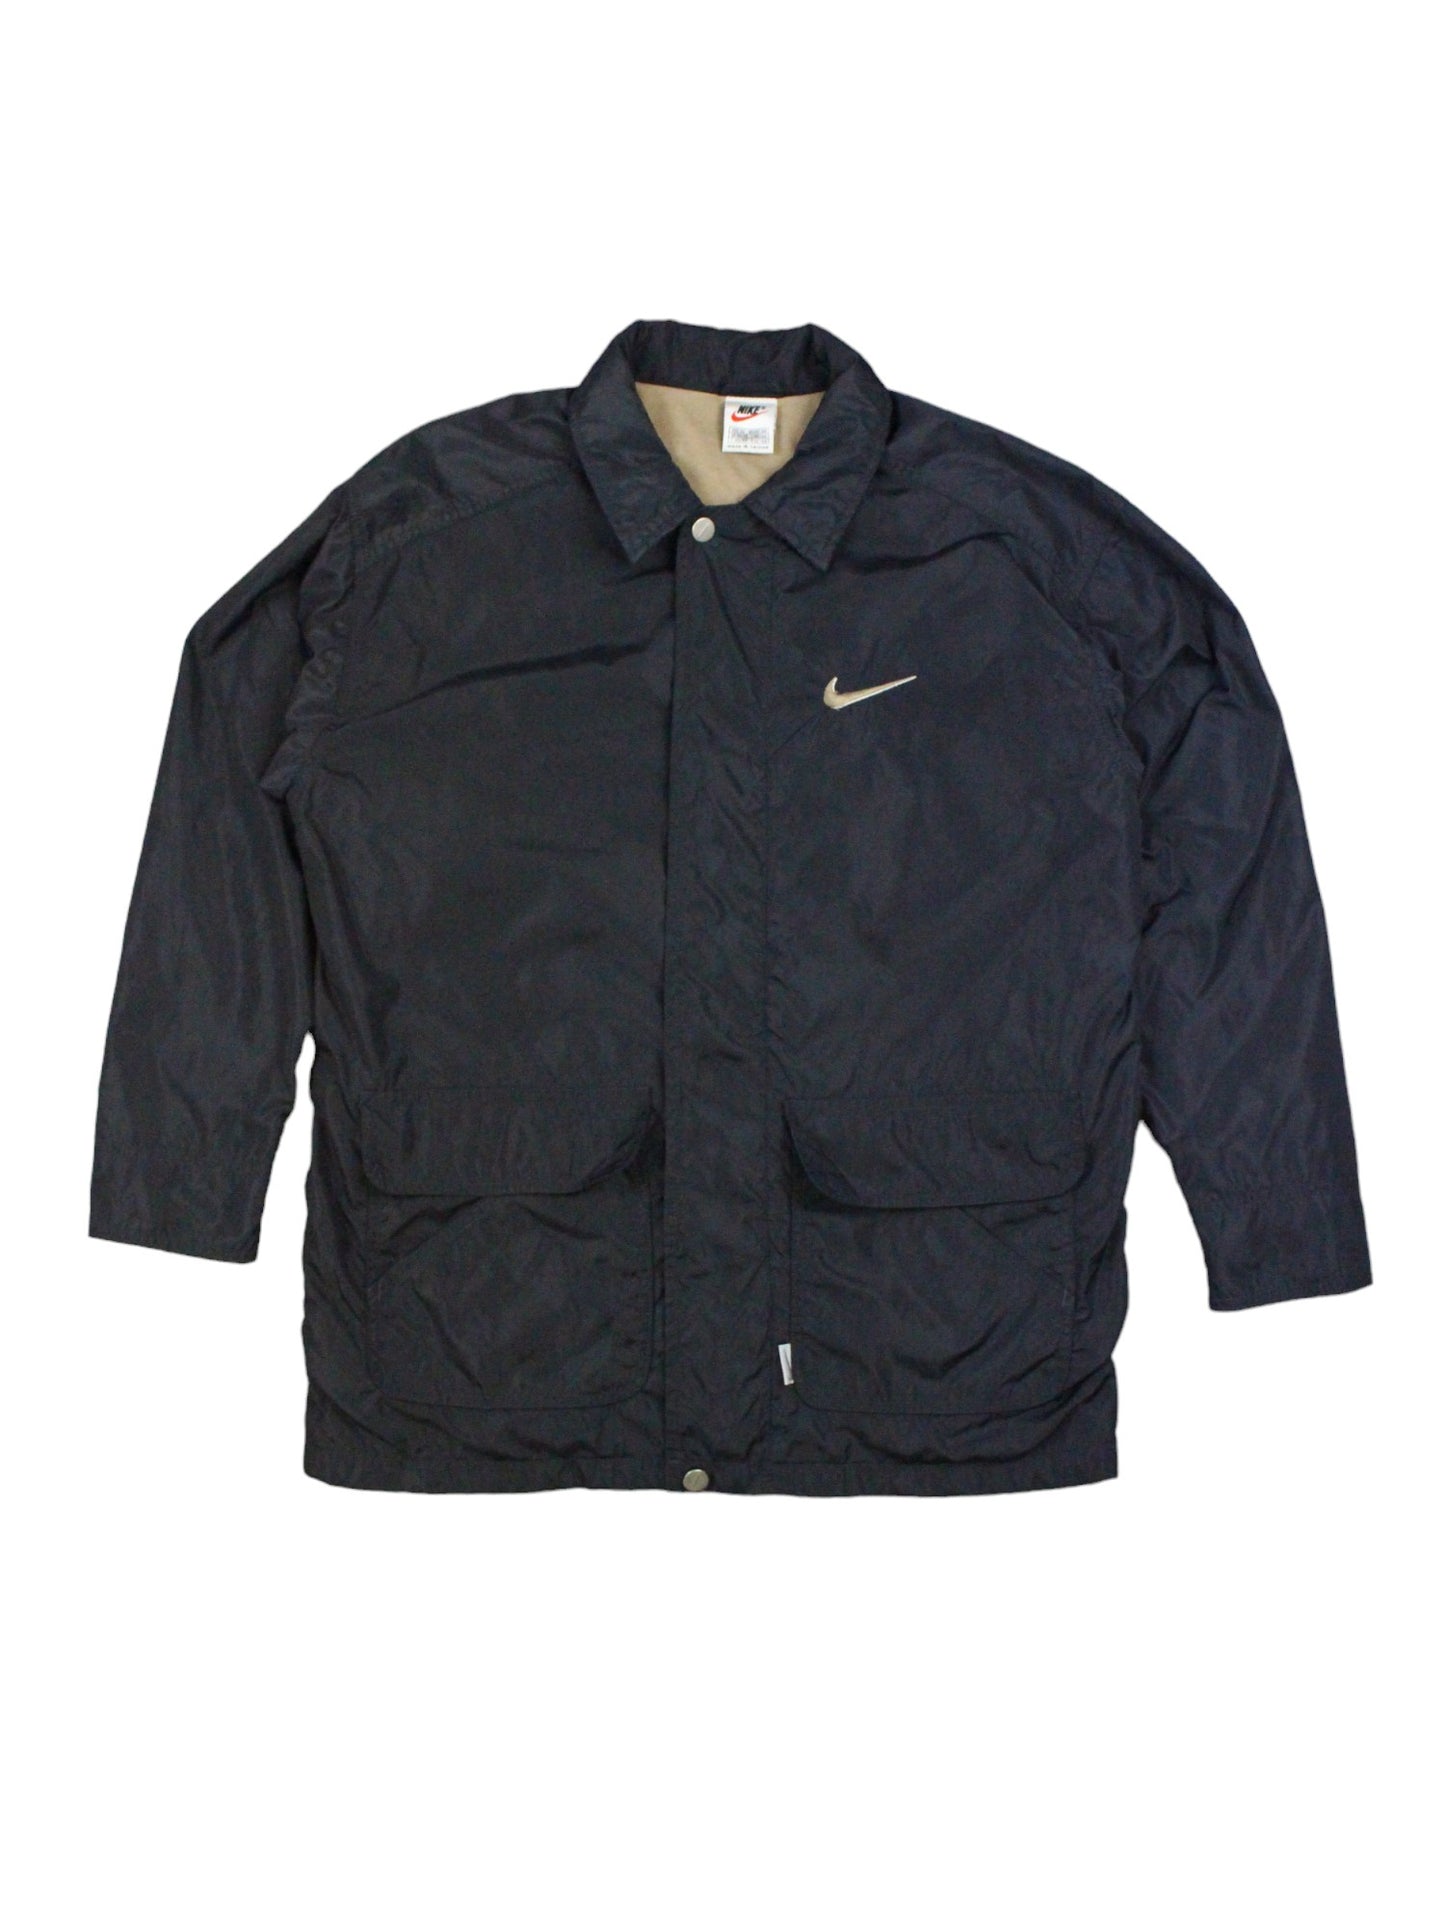 90s Nike Black Cotton Lined Jacket (S)